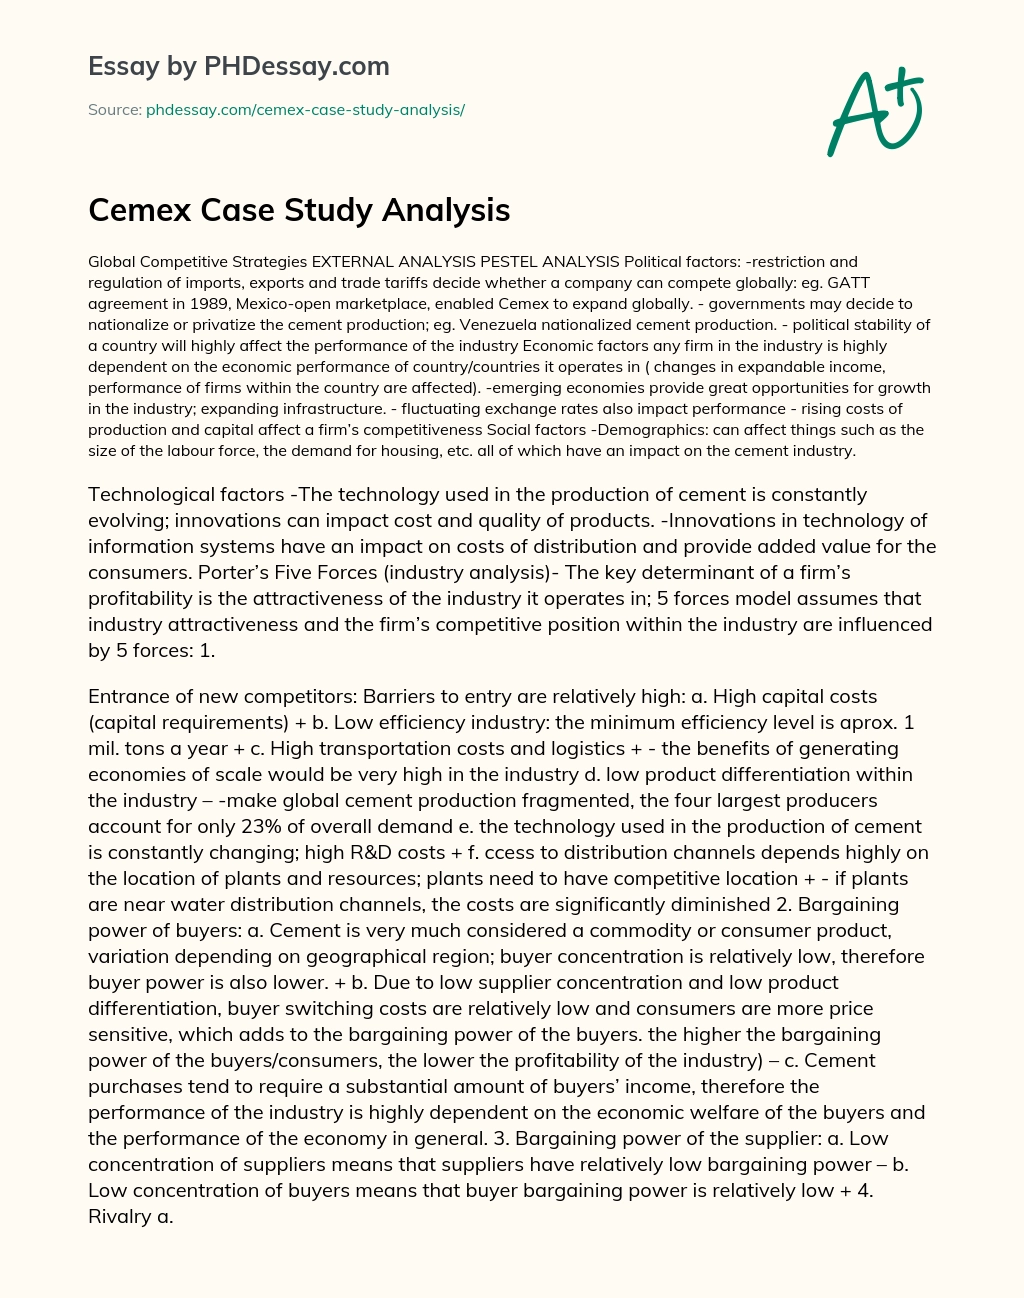 Cemex Case Study Analysis essay